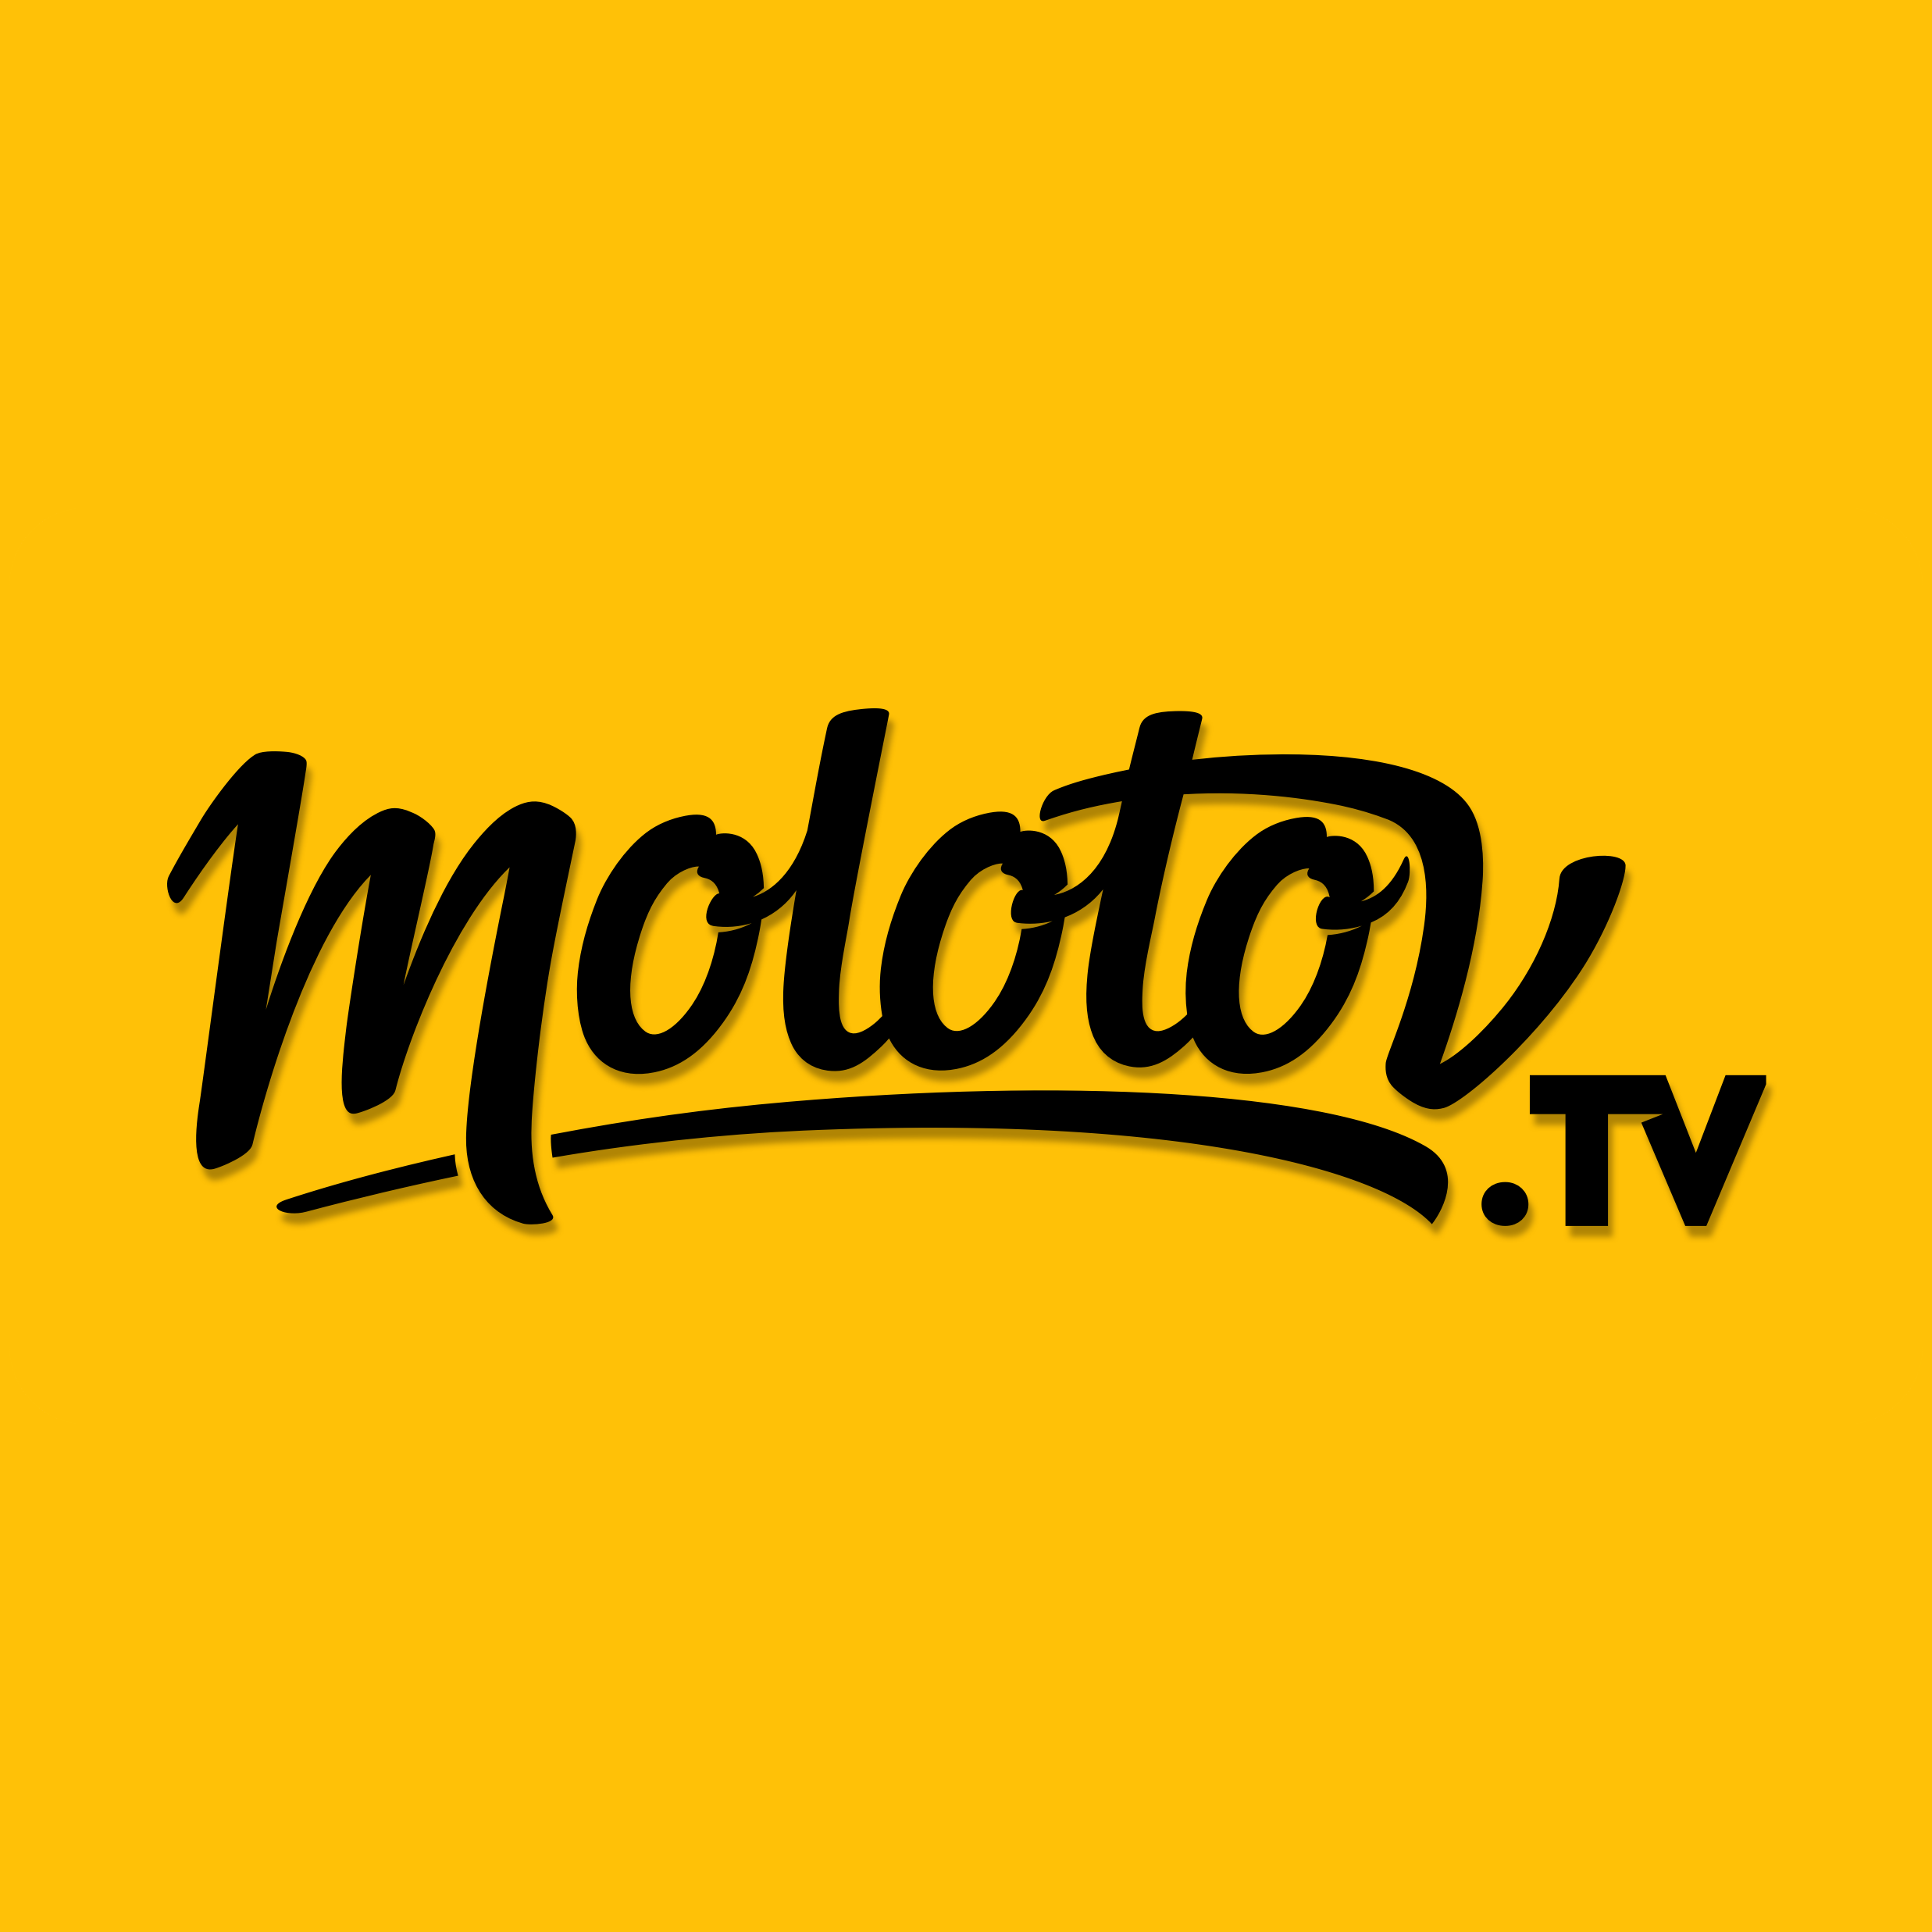 Installation de l'application Molotov TV sur les Smart TV SAMSUNG – Molotov